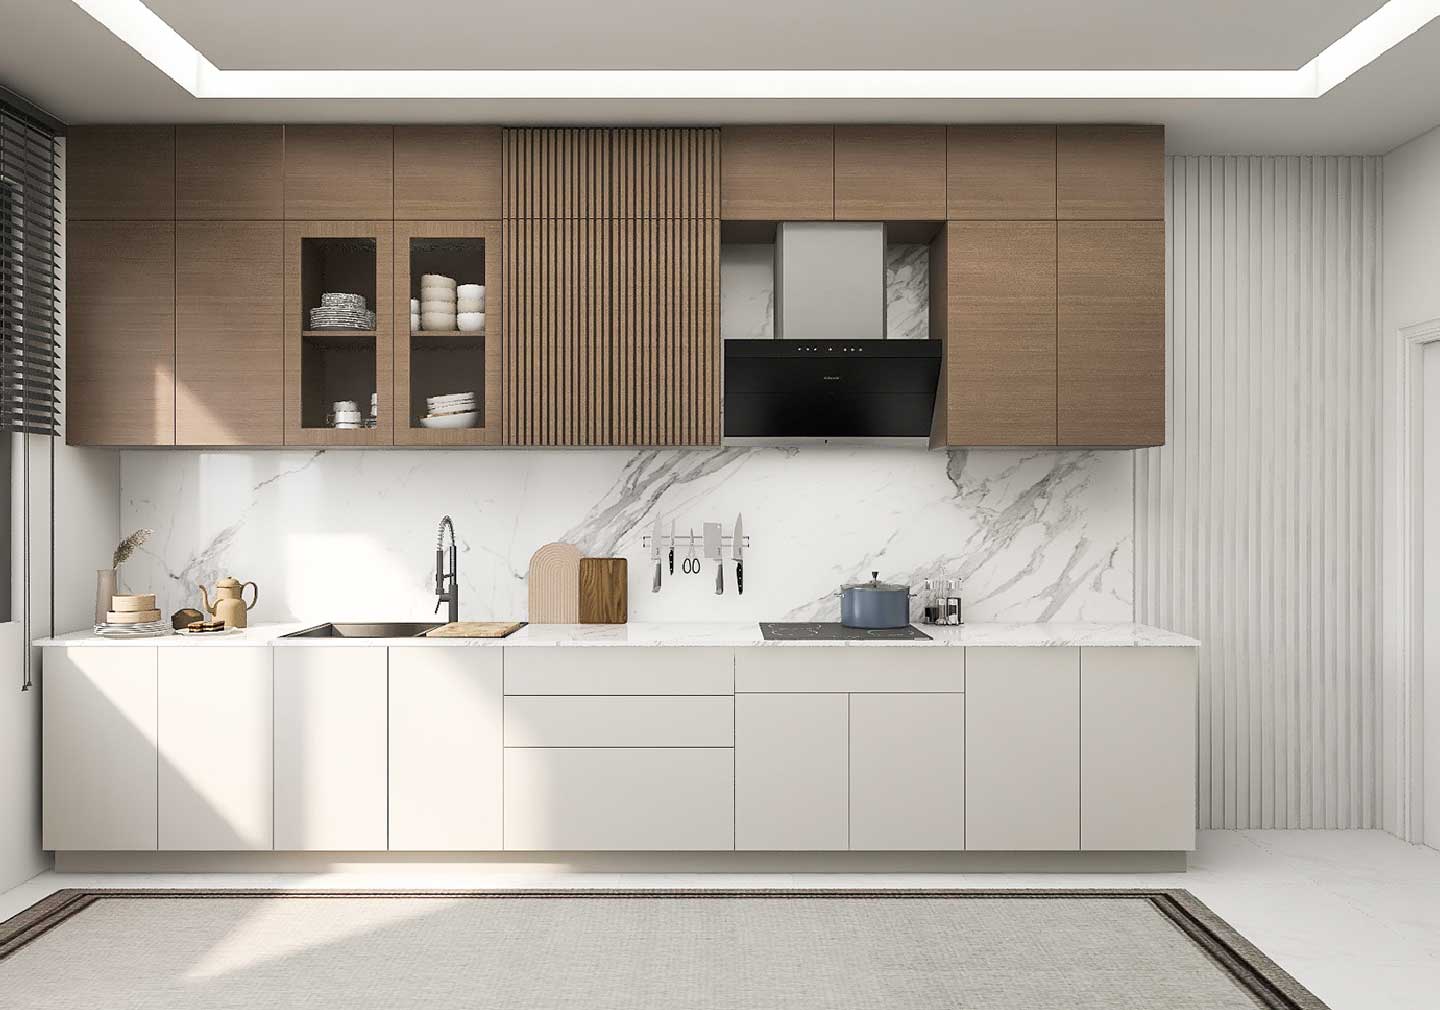 Space Efficiency and Organization: for modular kitchen interior designs